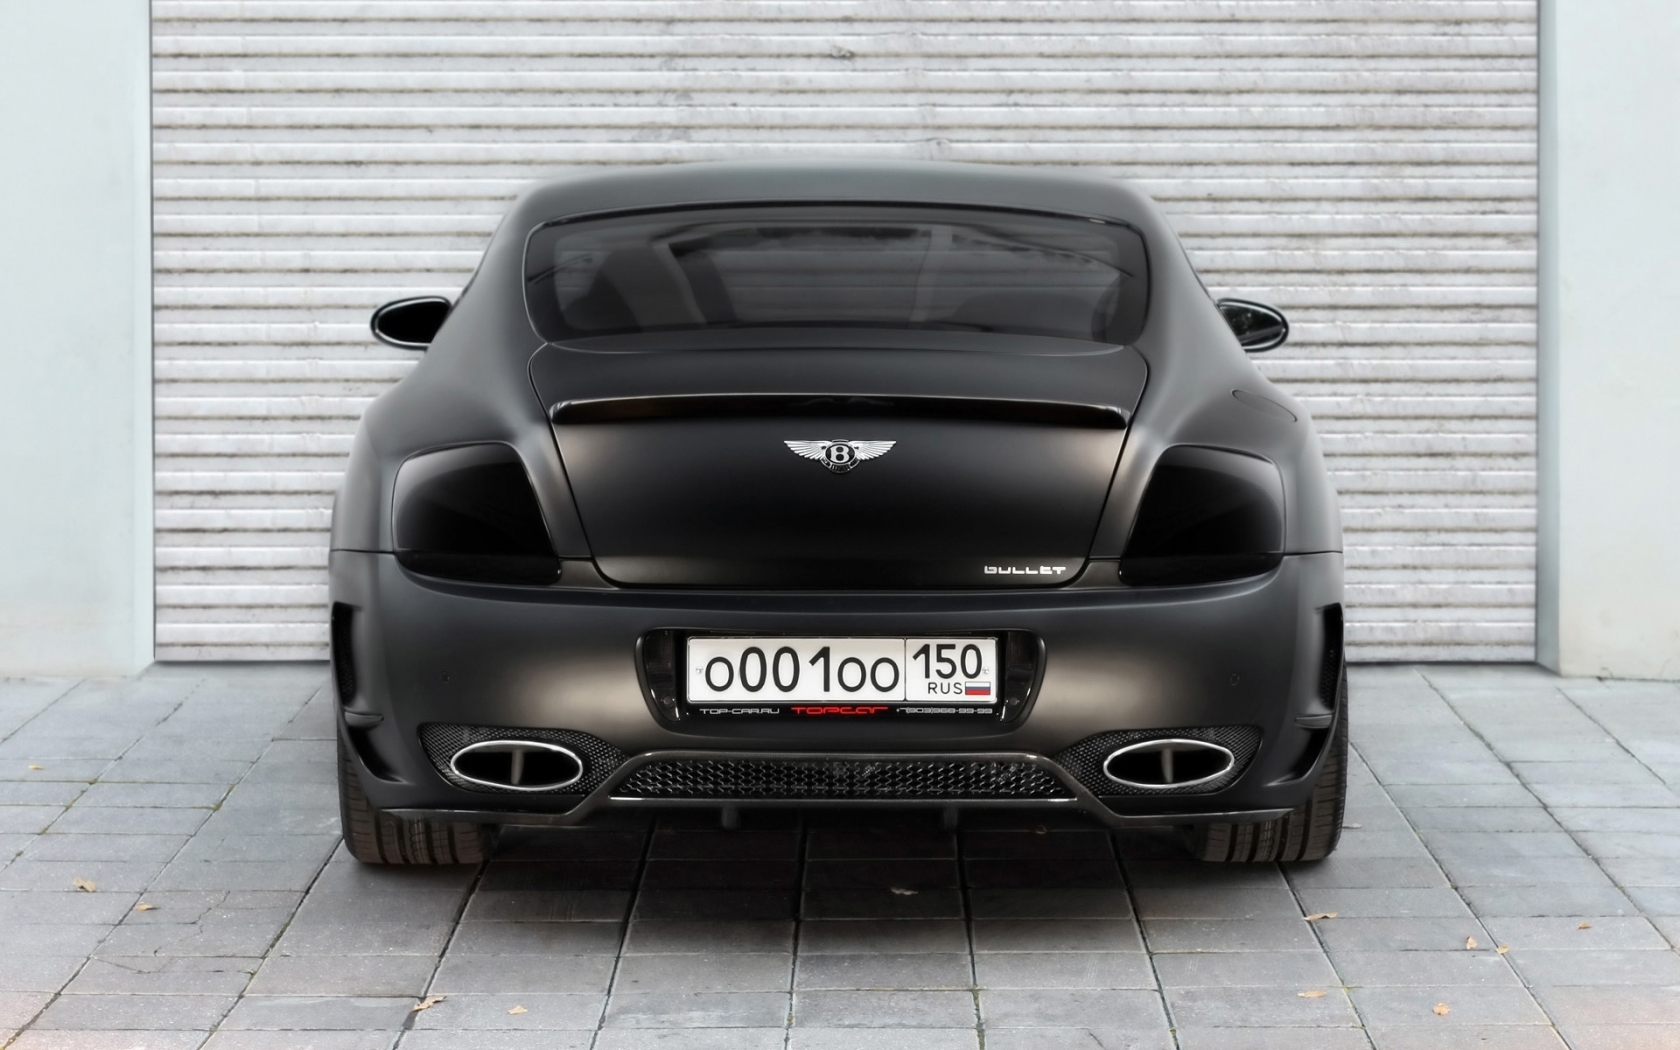 2010 Bentley Continental GT Bullet Rear for 1680 x 1050 widescreen resolution